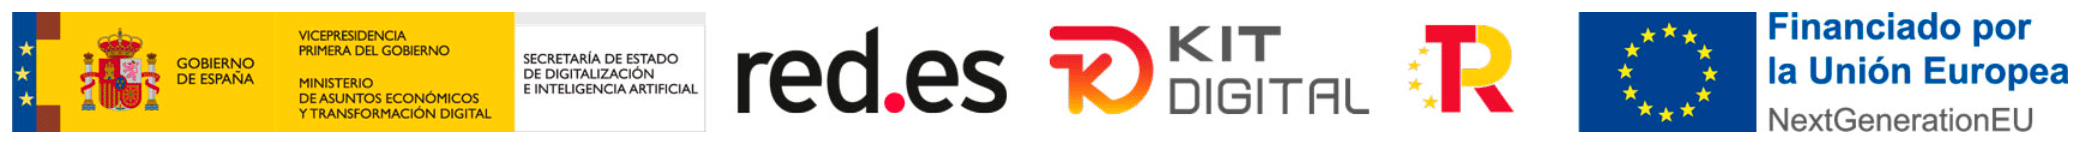 logos-oficiales-kit-digital